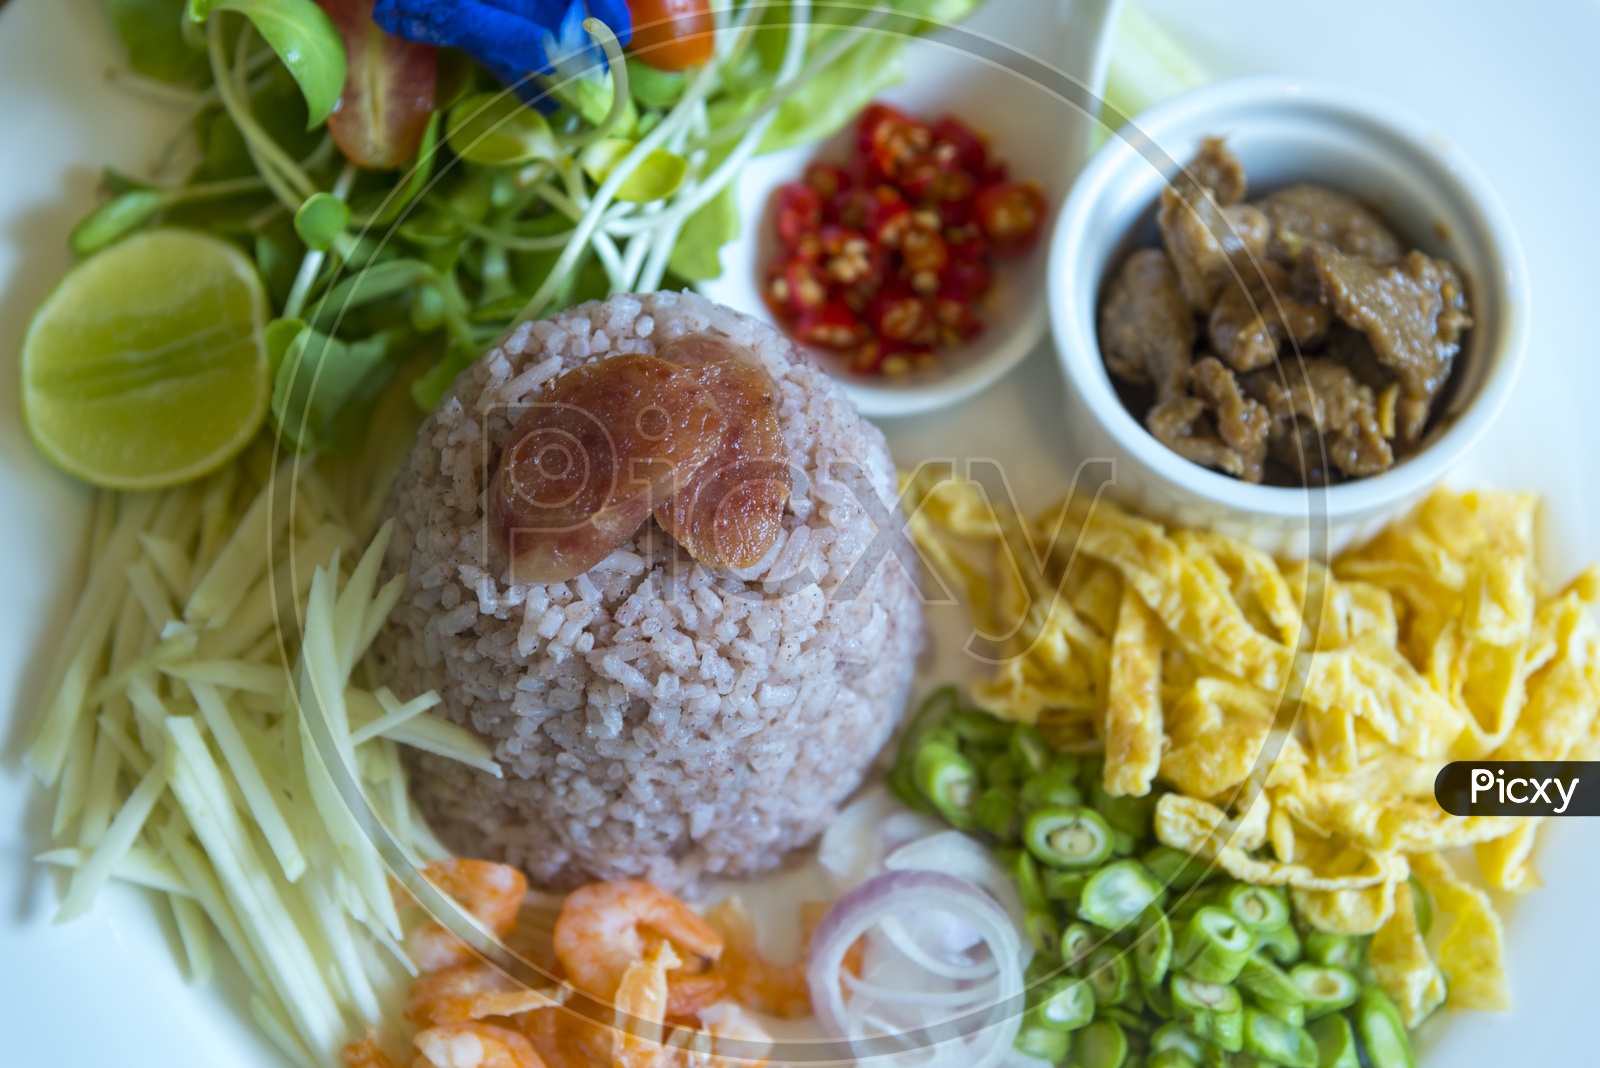 Thai Food, Rice Platter  With Pork, Shrimp or Prawn and Veggies Served Closeup